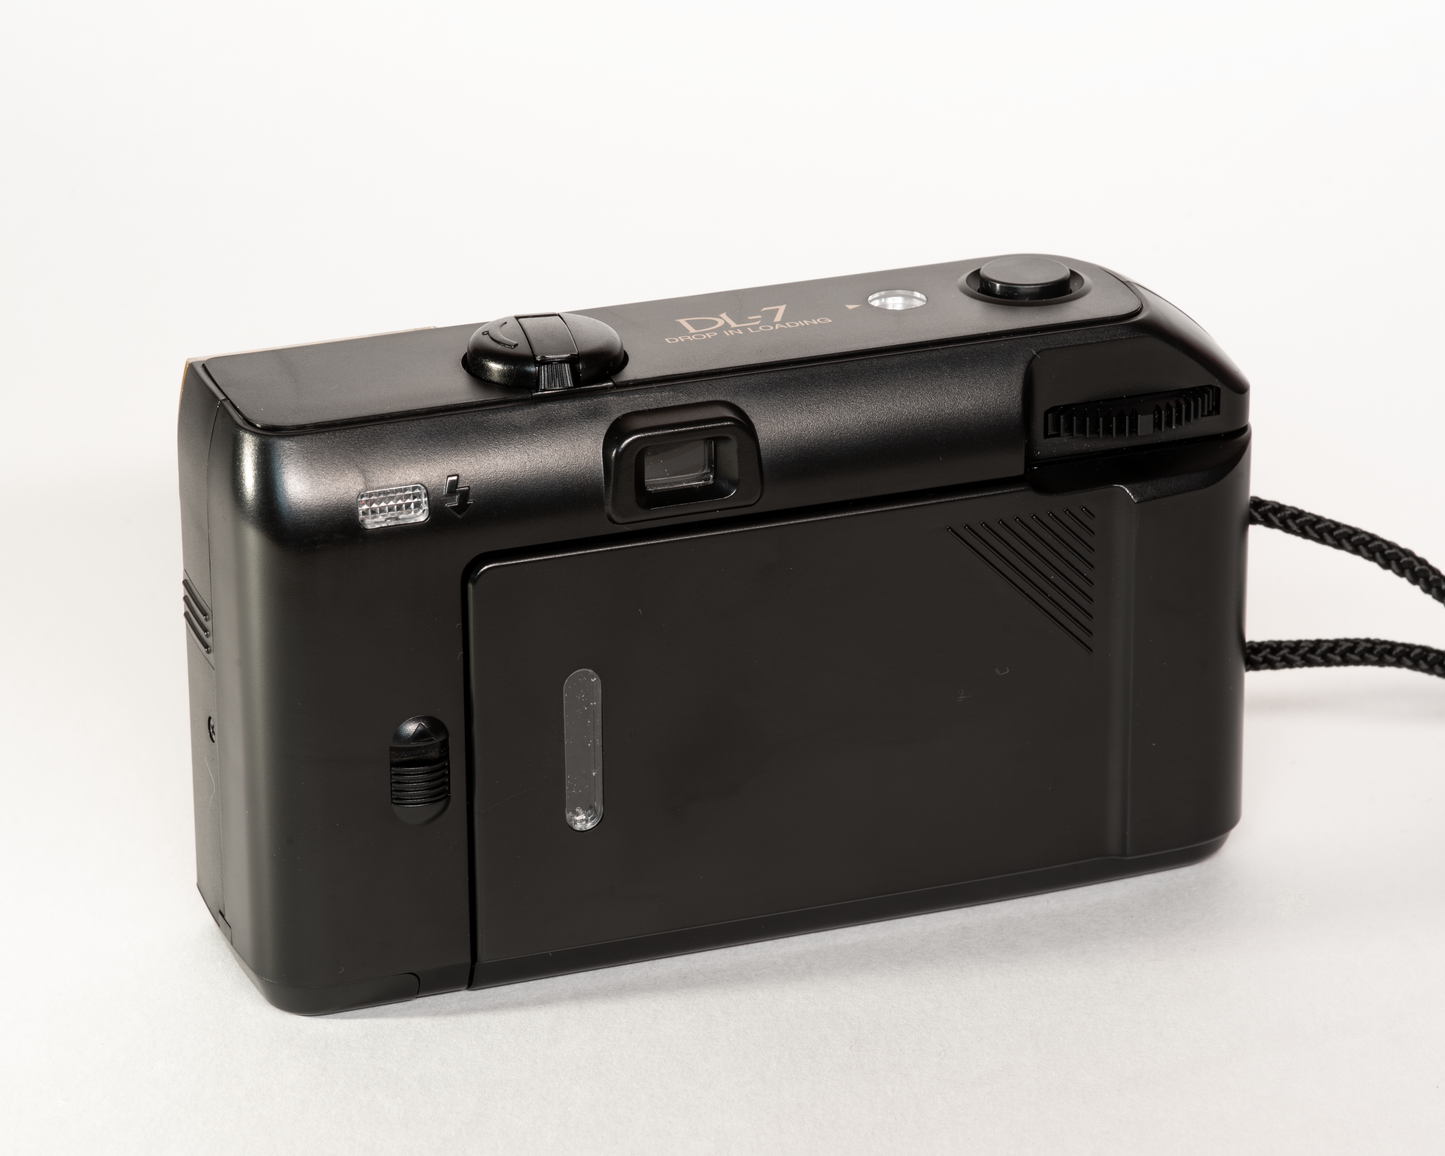 Fuji DL-7 Point & Shoot 35mm Film Camera